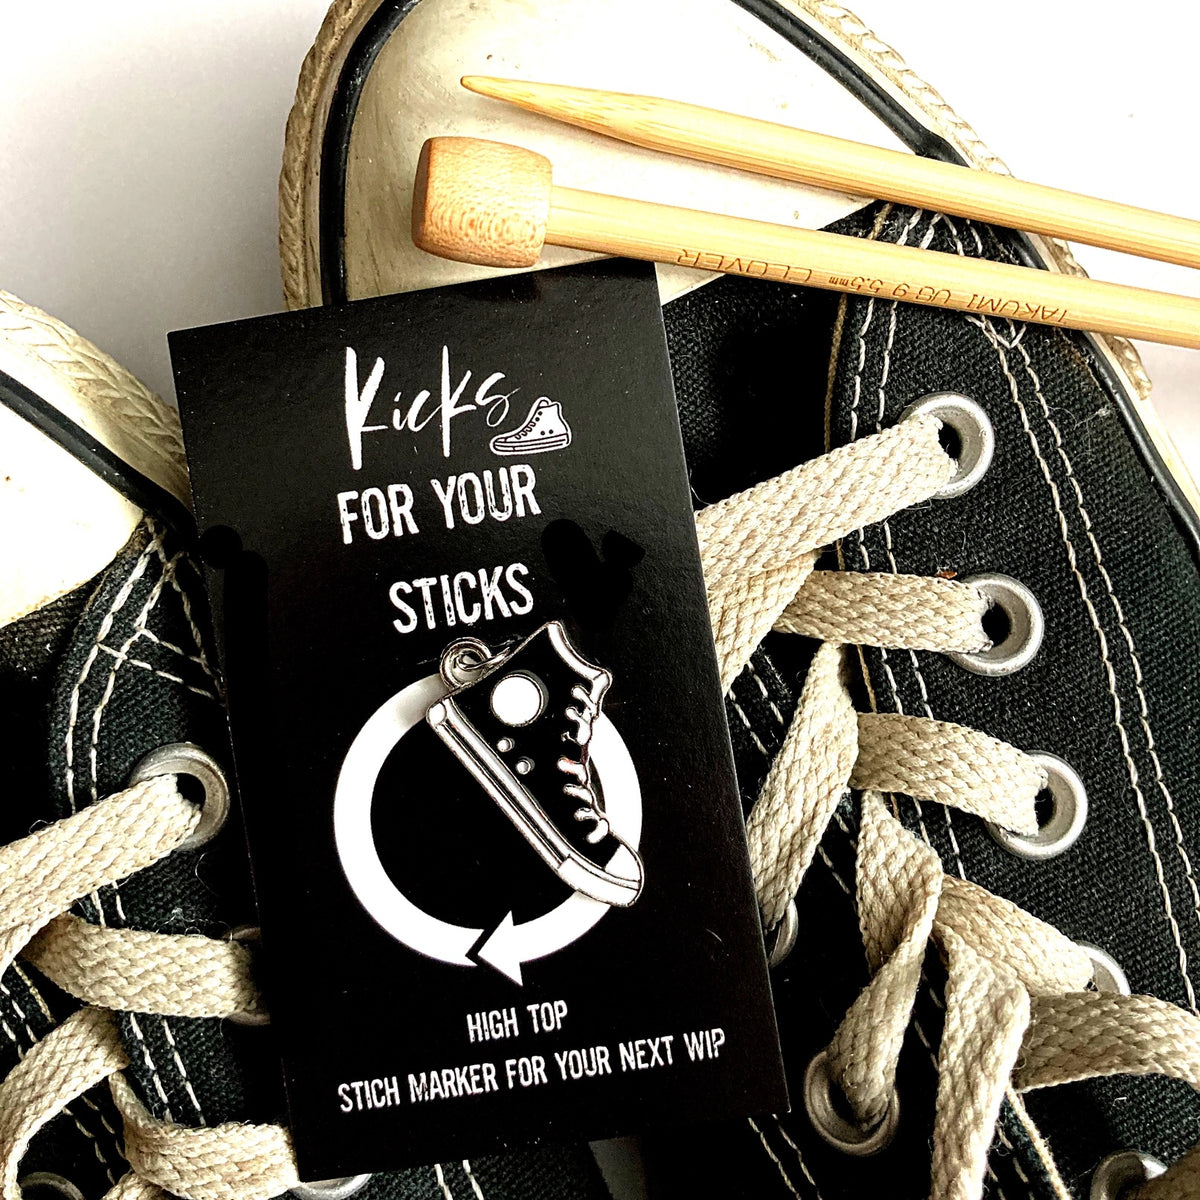 Kicks for Your Sticks Stitch Marker